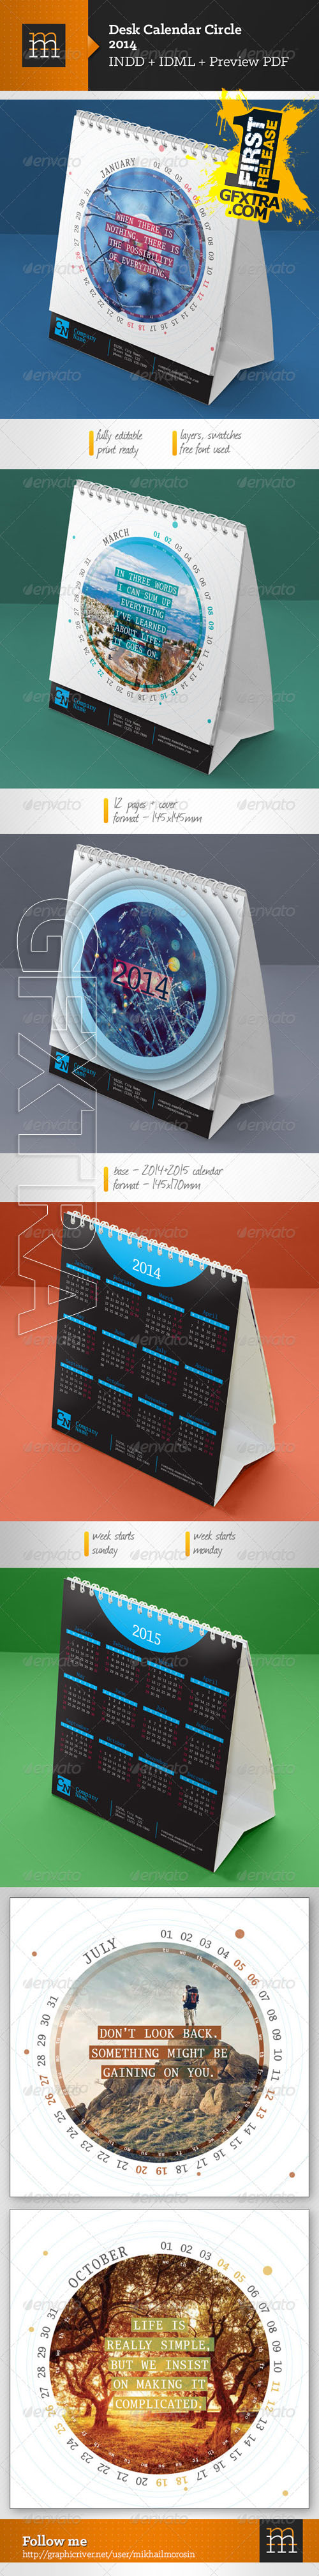 GraphicRiver - Desk Calendar-4 2014 Circle 